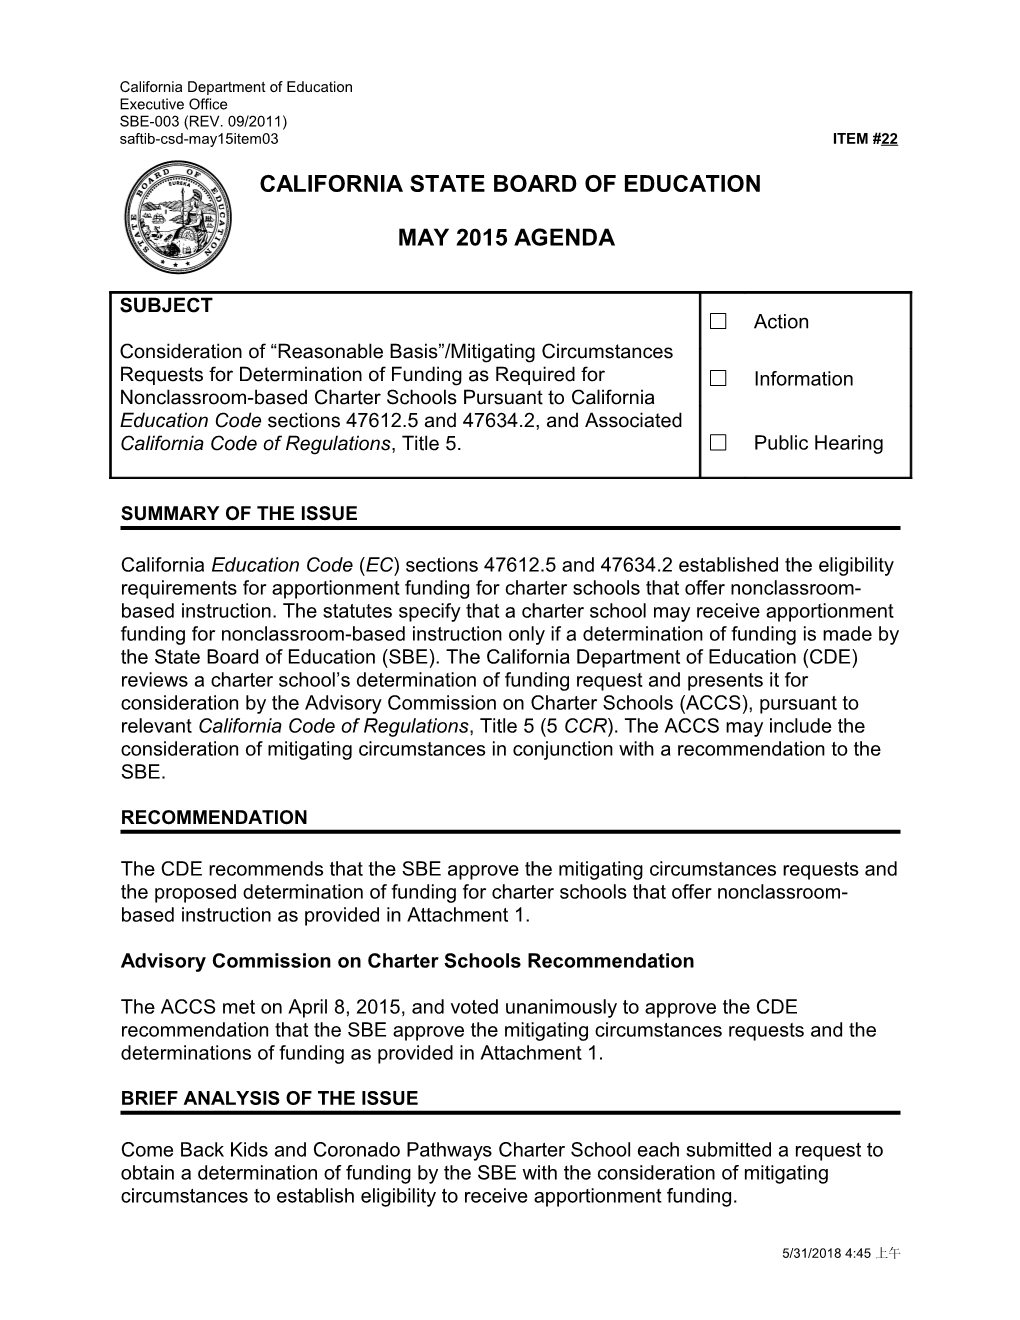 May 2015 Agenda Item 22 - Meeting Agendas (CA State Board of Education)